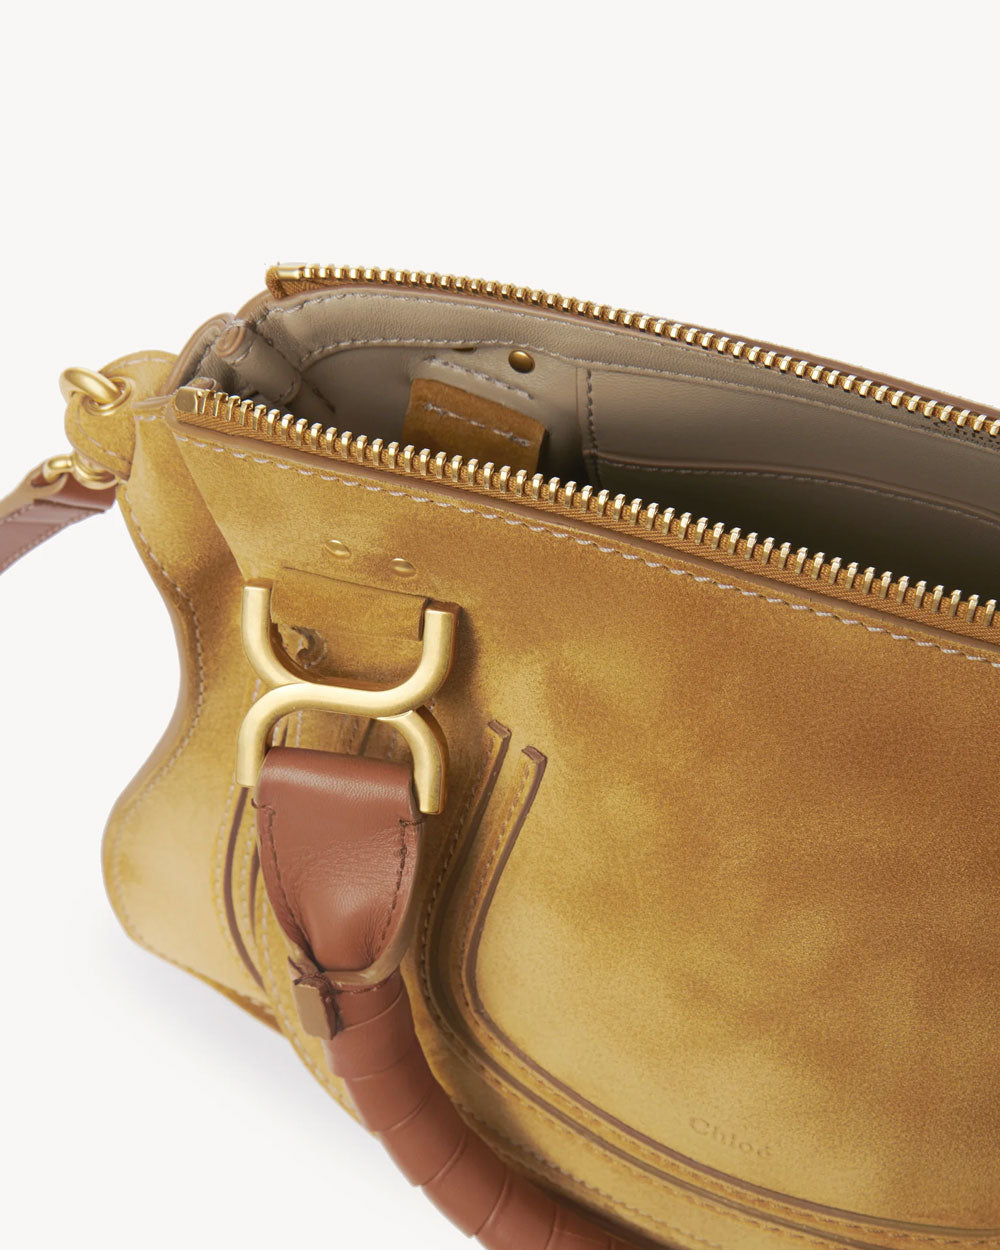 Marcie Handbag in Safari Gold